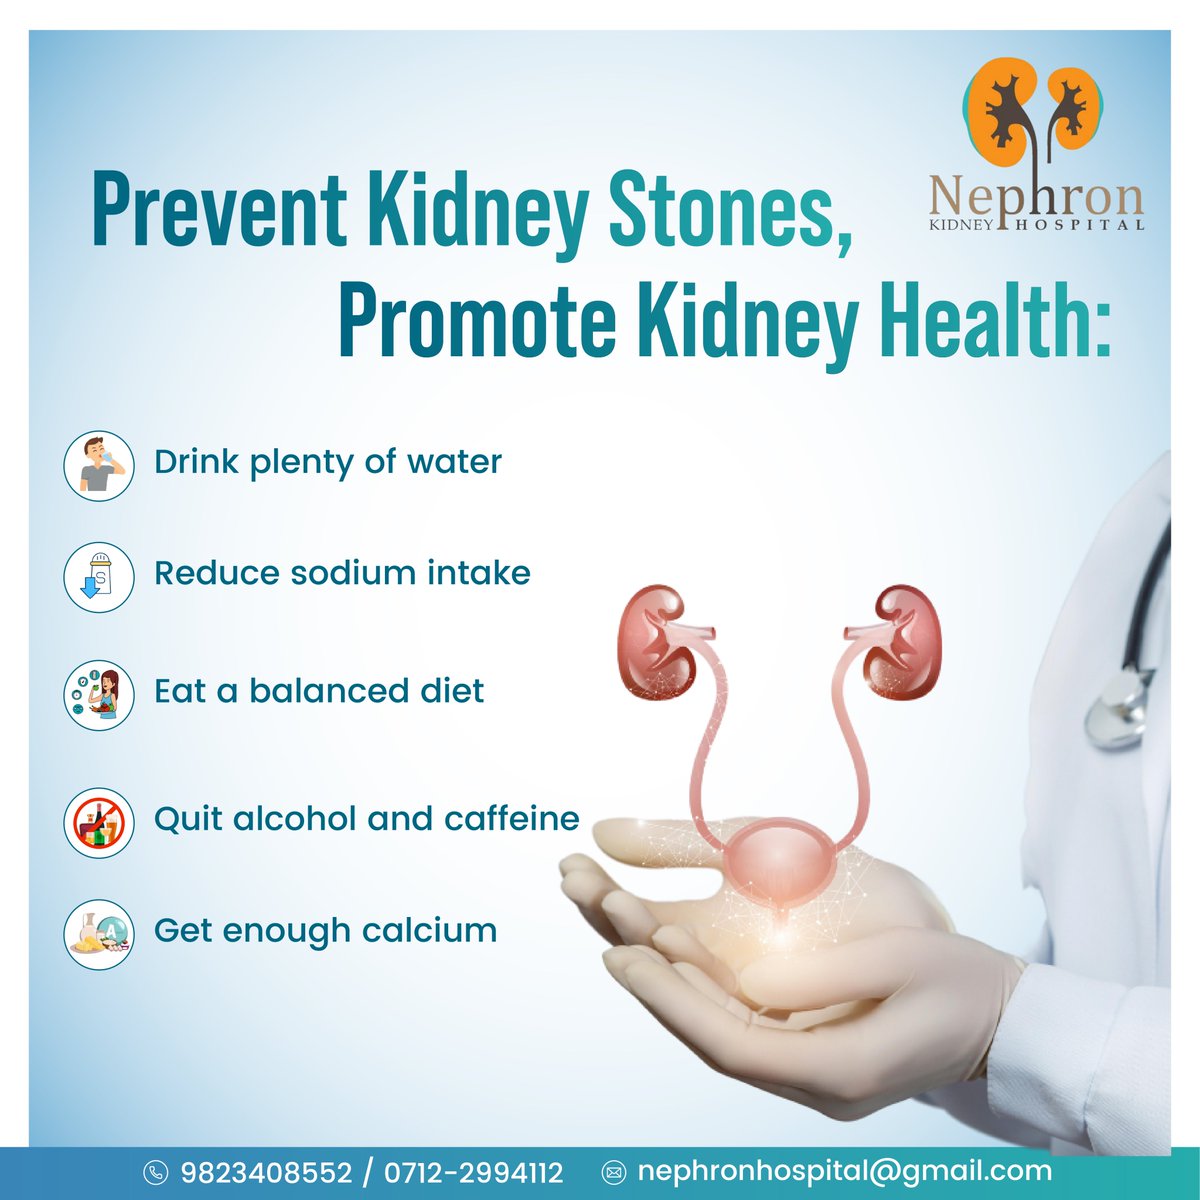 Prevent Kidney Stones, Promote Kidney Health:

#PreventKidneyStones #KidneyStonePrevention #HealthyHydration #BalancedDiet #ReduceSaltIntake #StayHydrated #LifestyleChoices #KidneyHealthAwareness